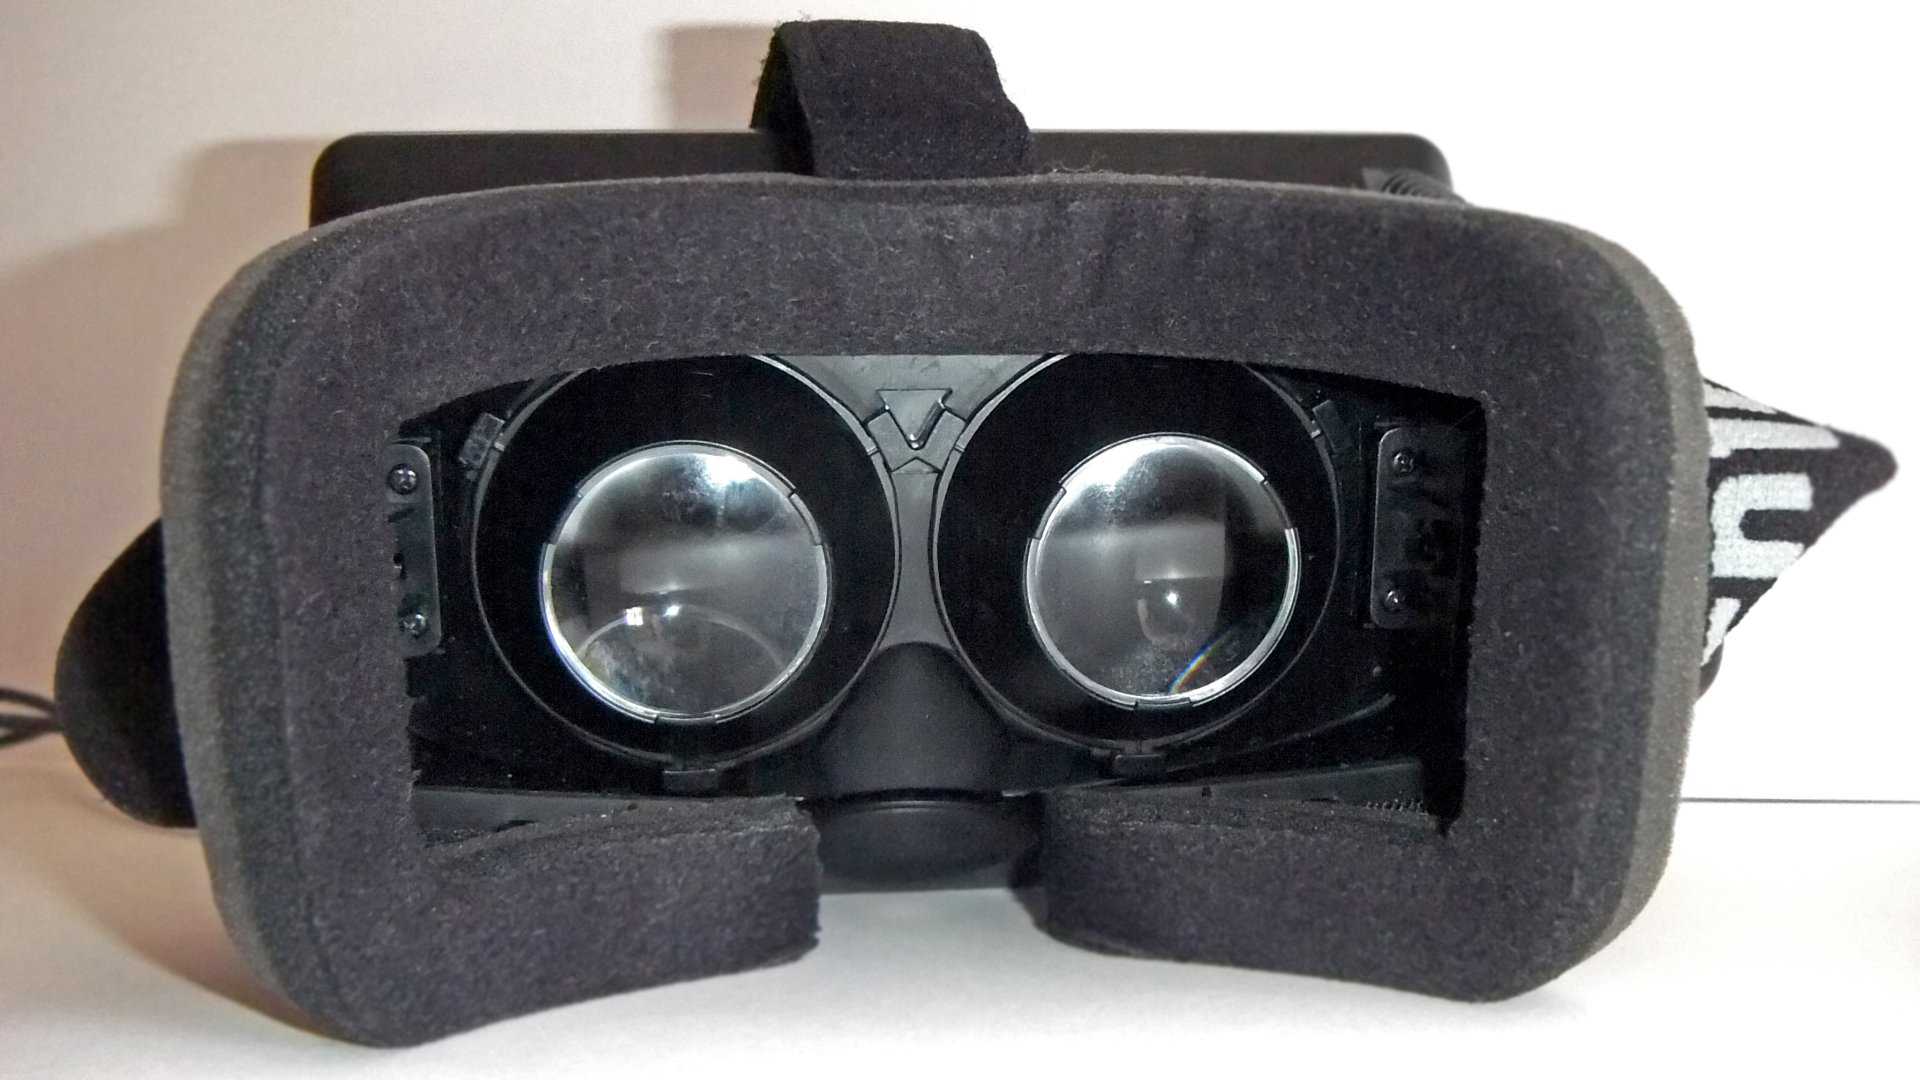 Oculus Development Kit 1